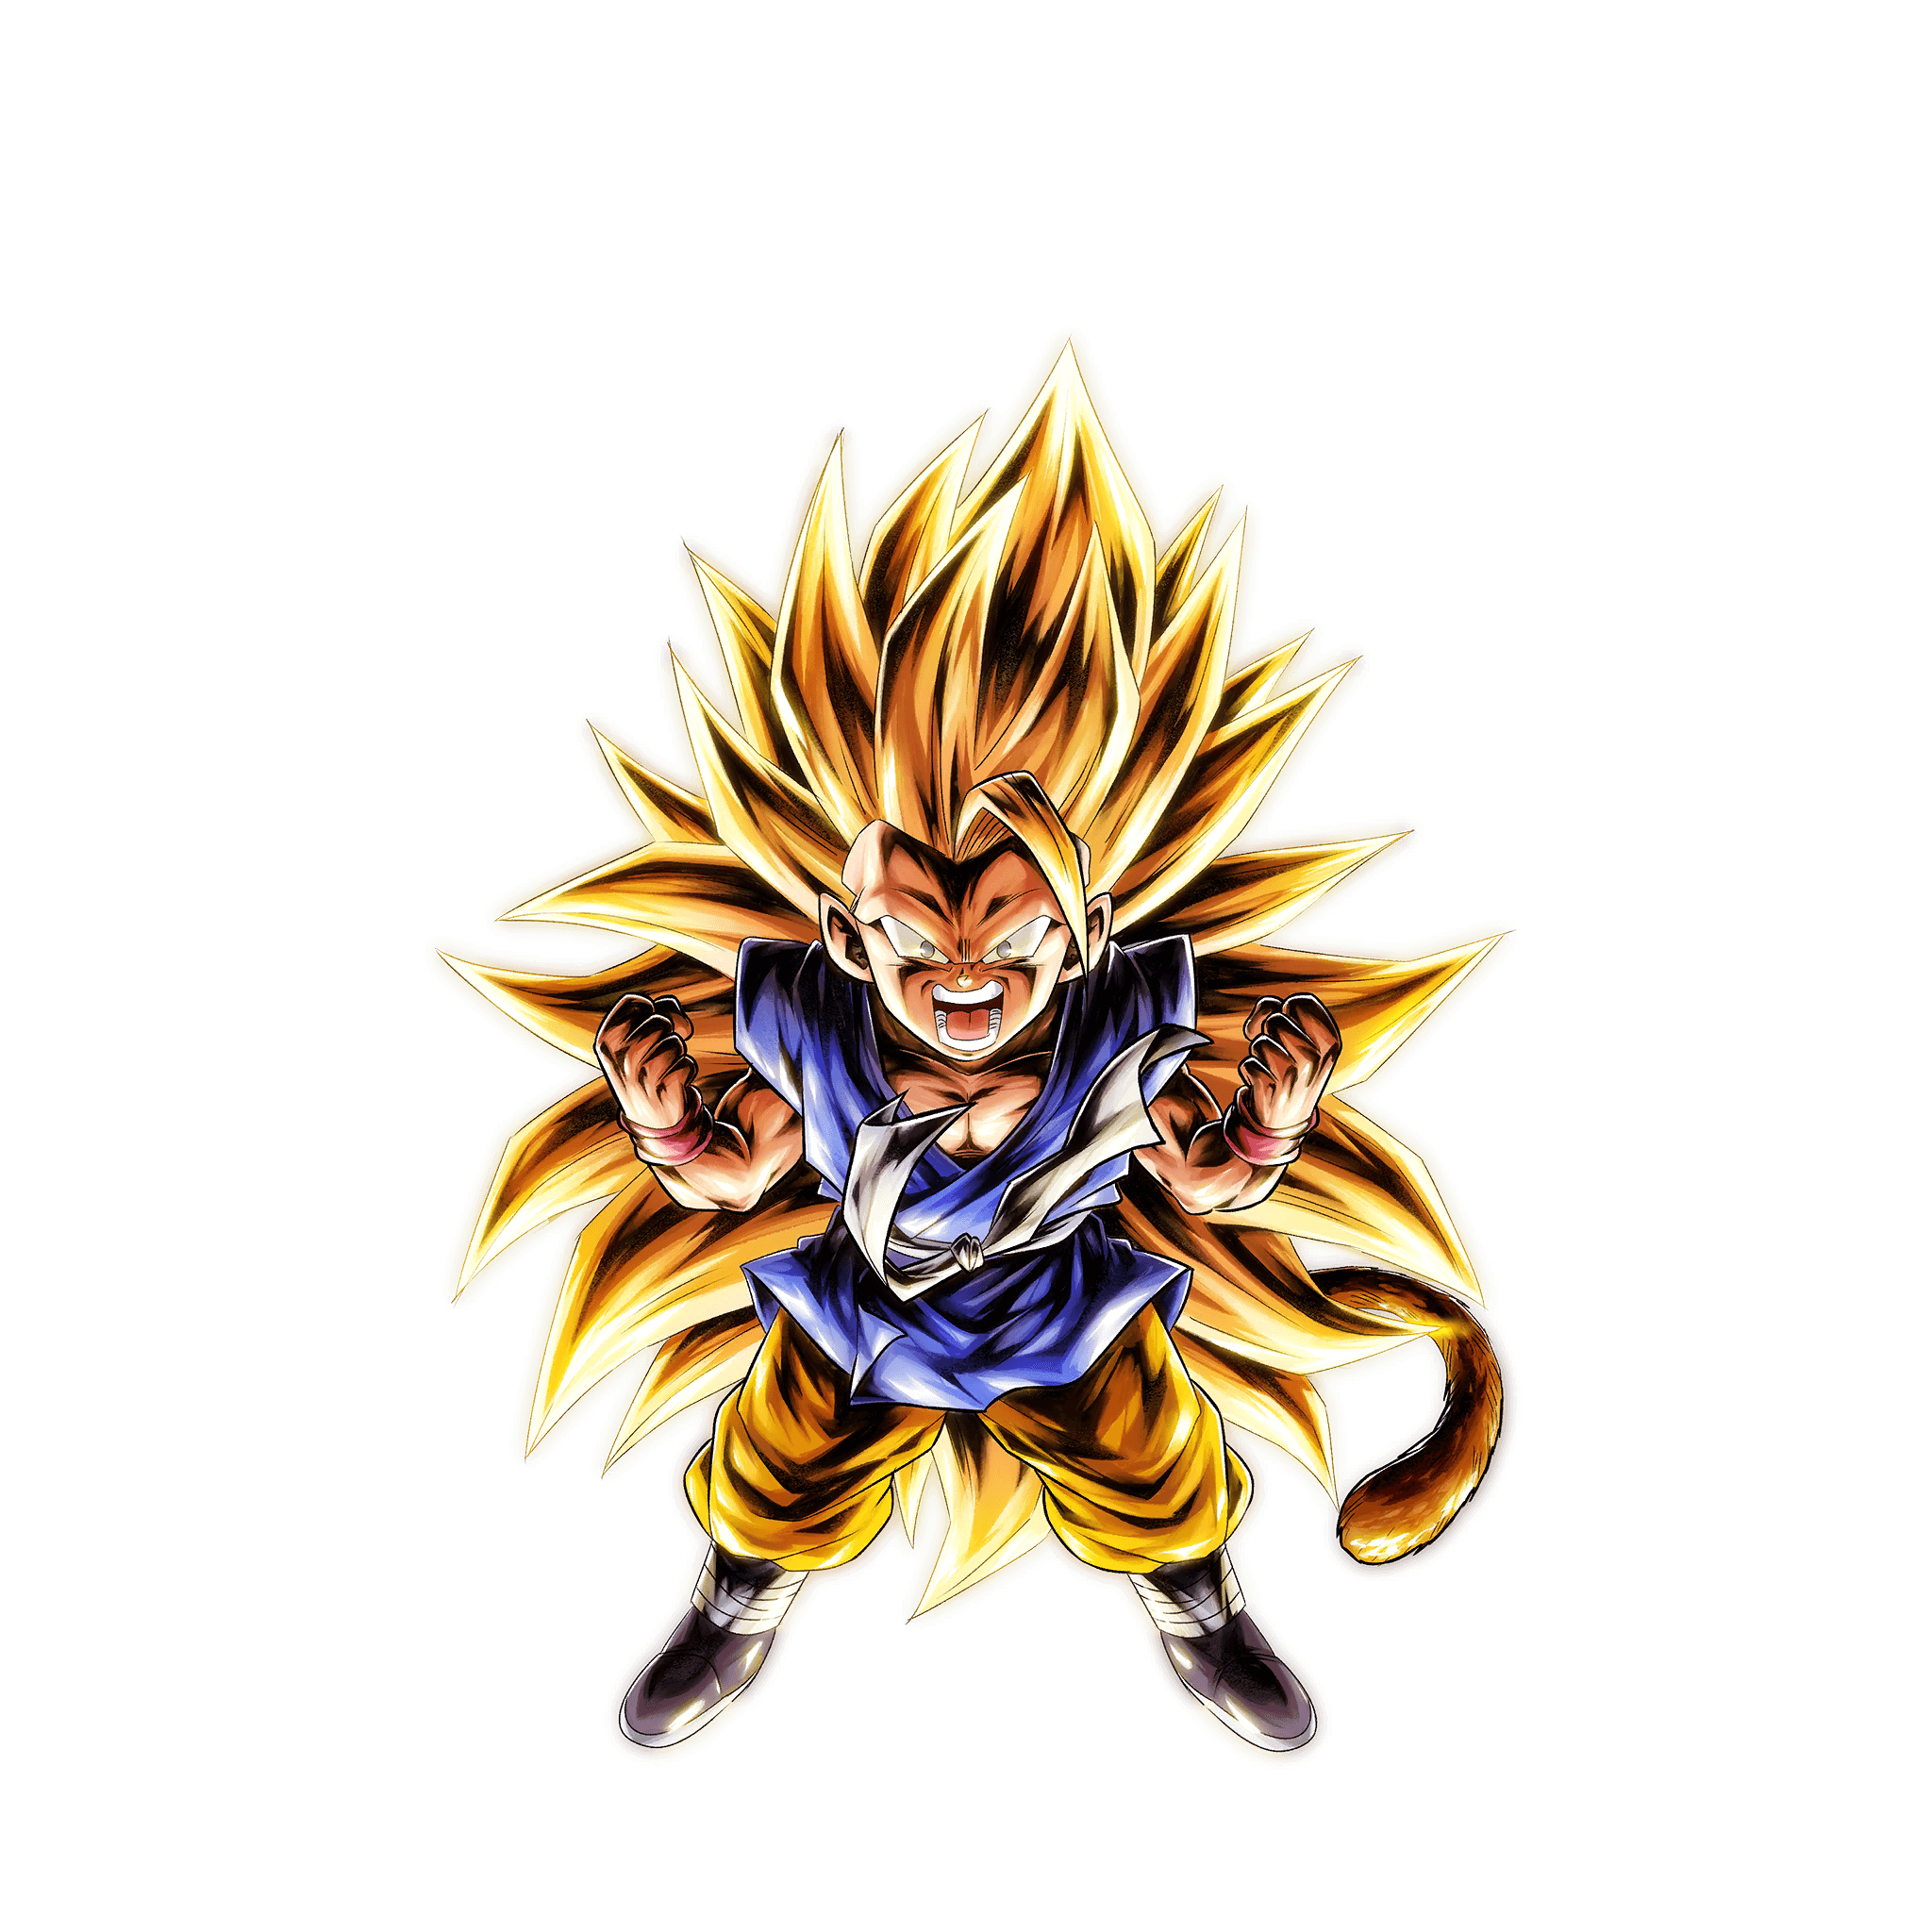 SP Super Saiyan 3 Goku (Blue)  Dragon Ball Legends Wiki - GamePress